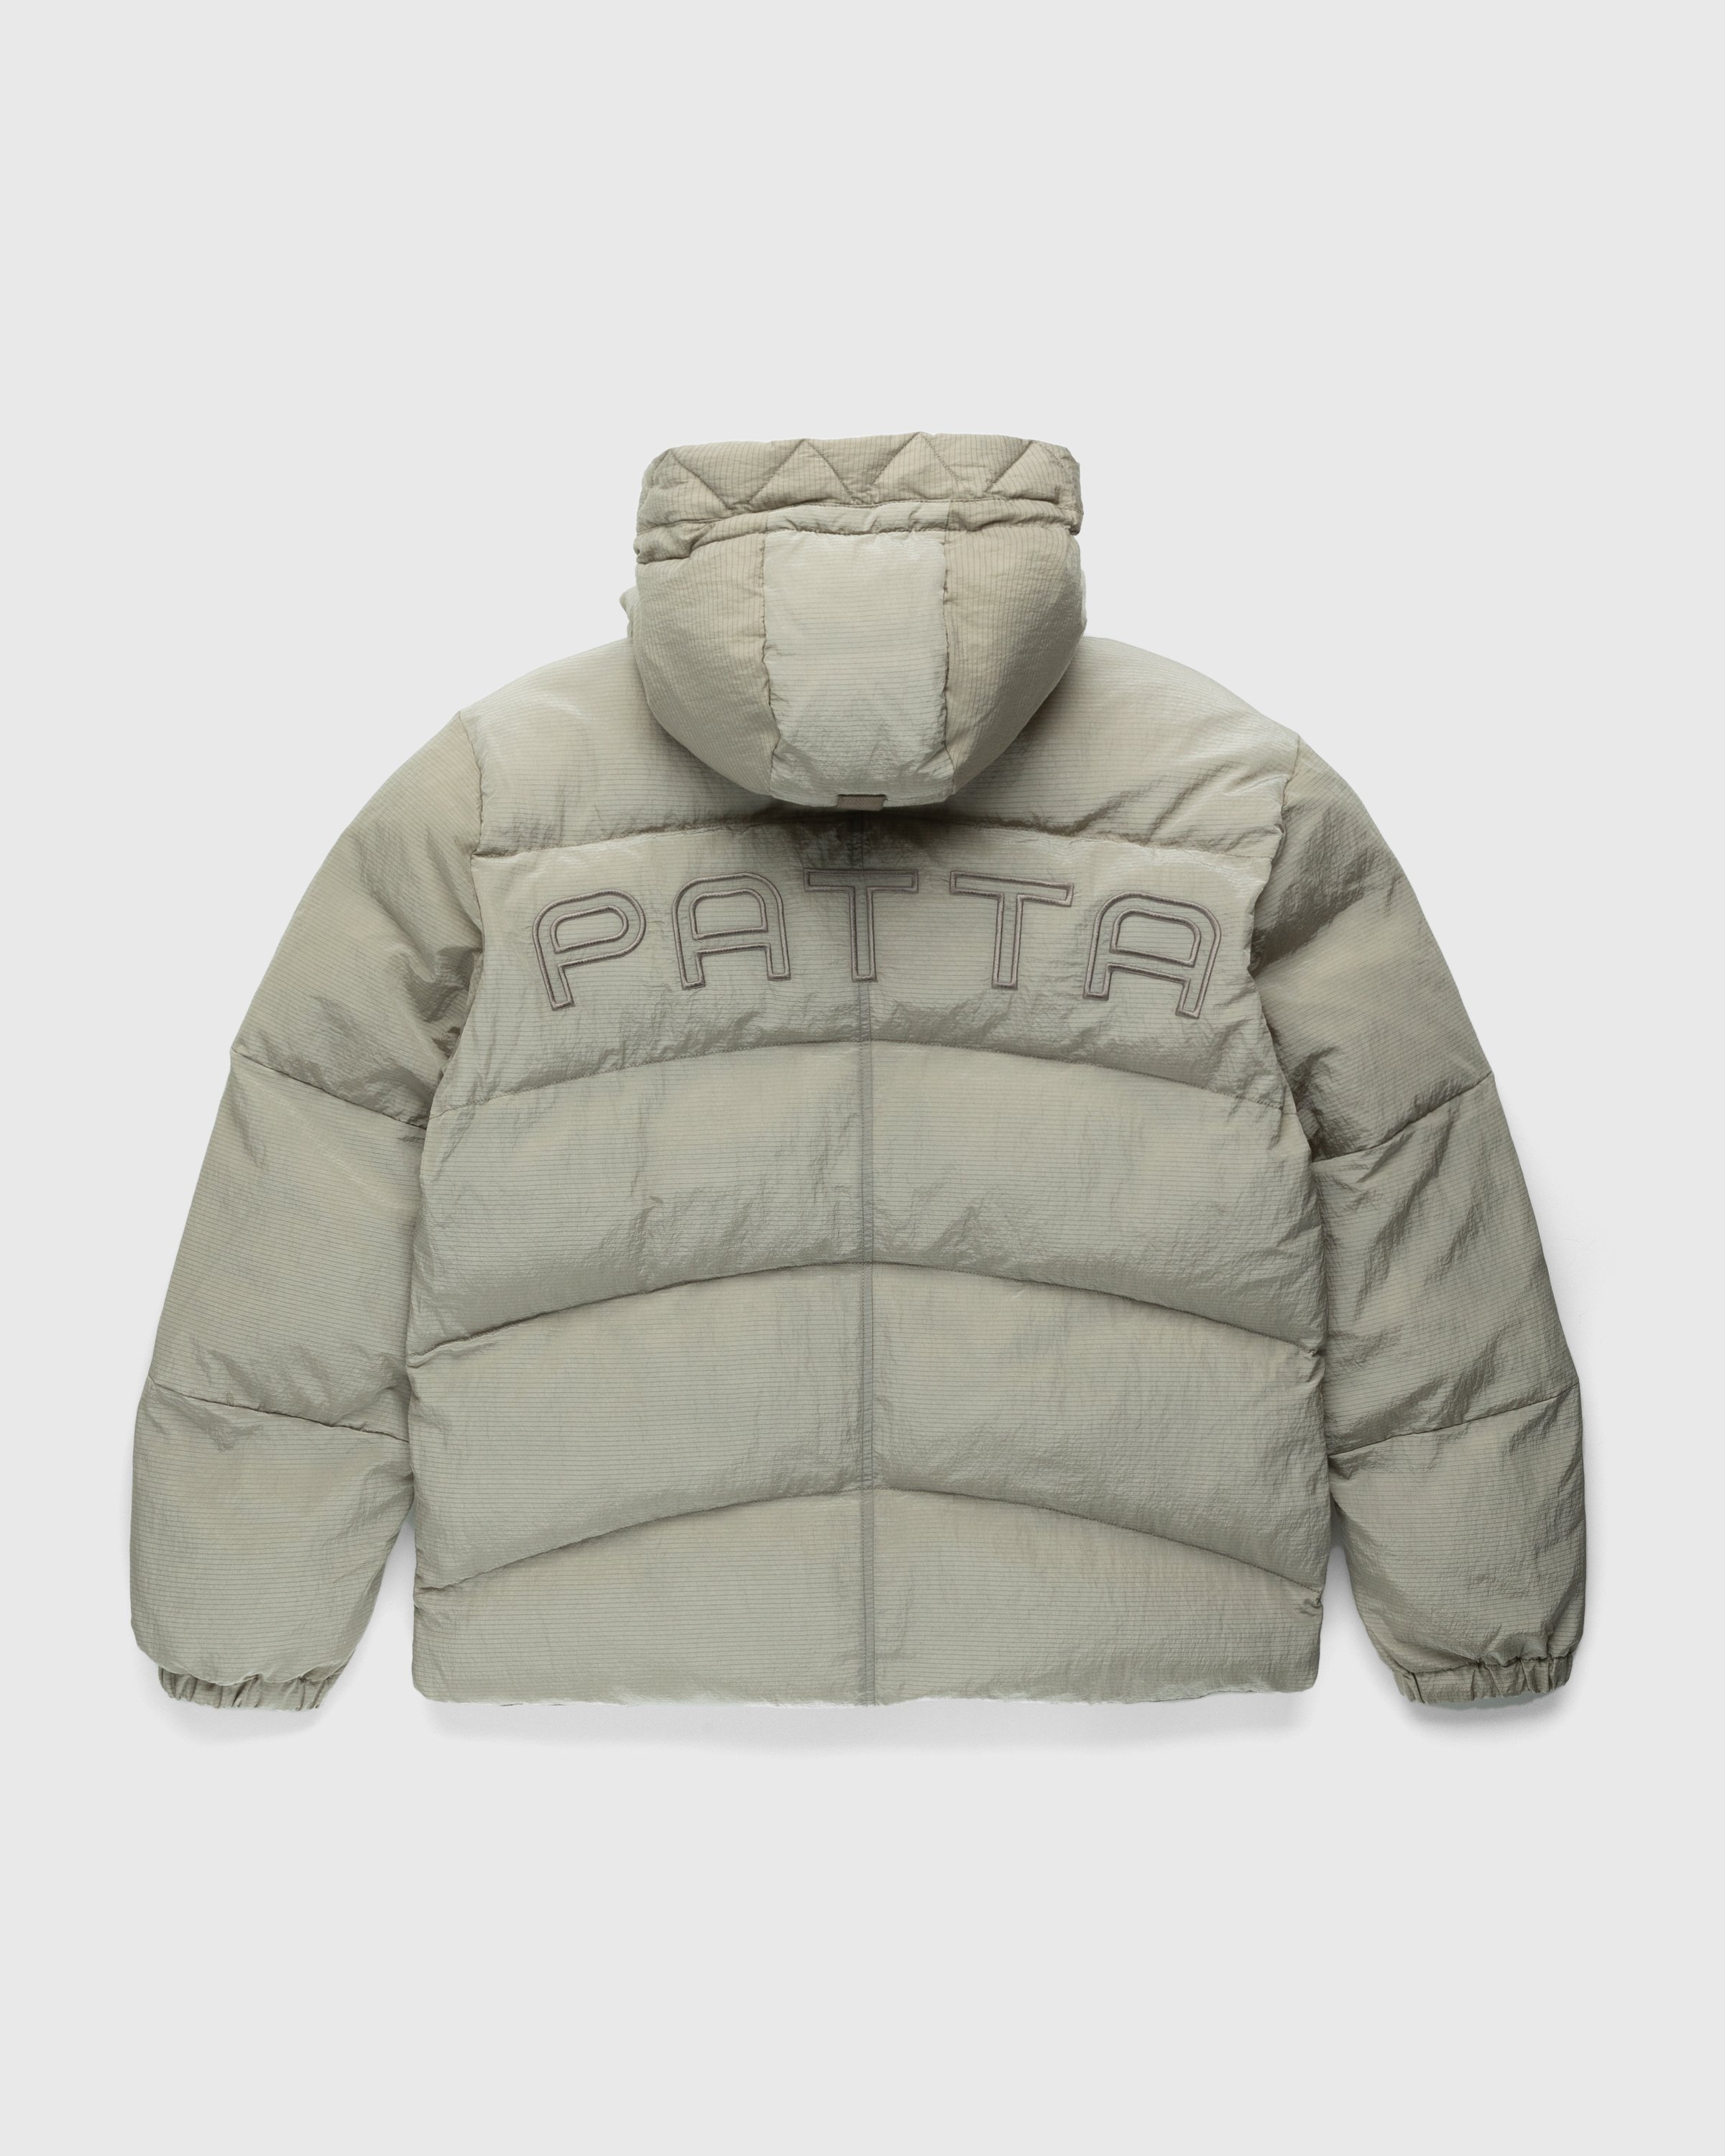 Patta - Ripstop Puffer Jacket Seneca Rock - Clothing - Grey - Image 2